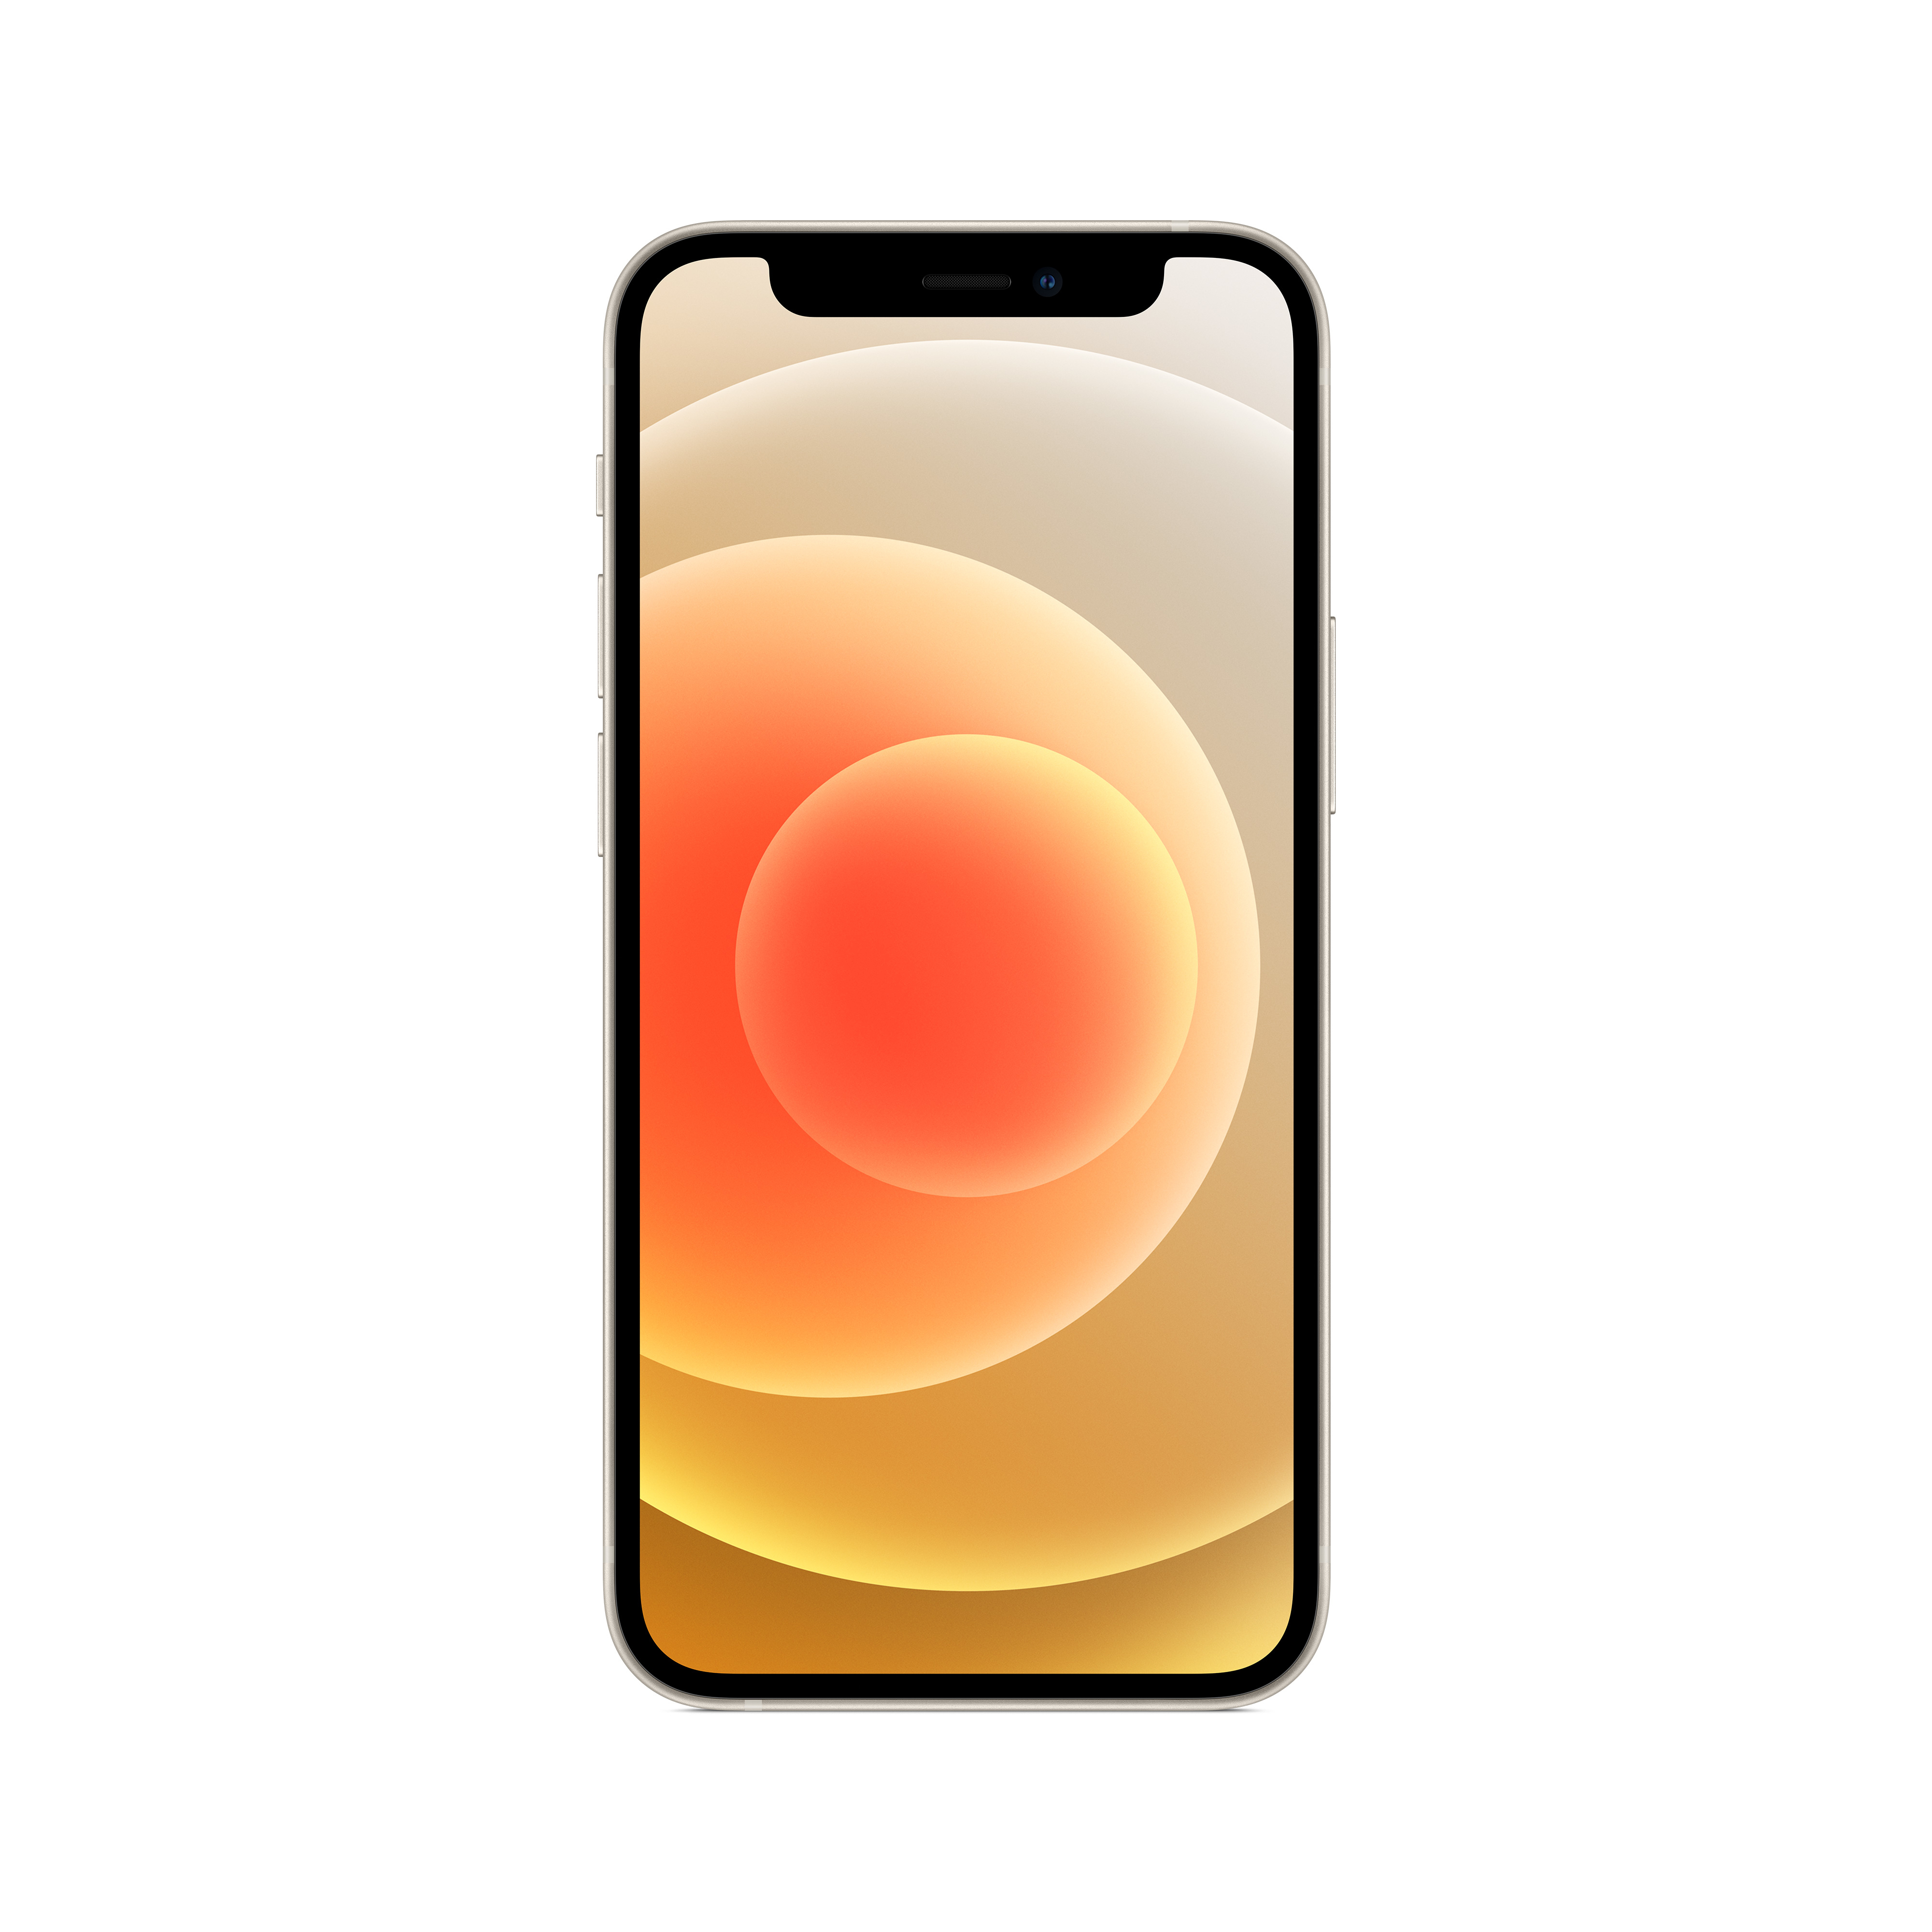 Apple iPhone 12 mini 256 GB / wit / (dualsim) / 5G | Reviews | Kieskeurig.nl